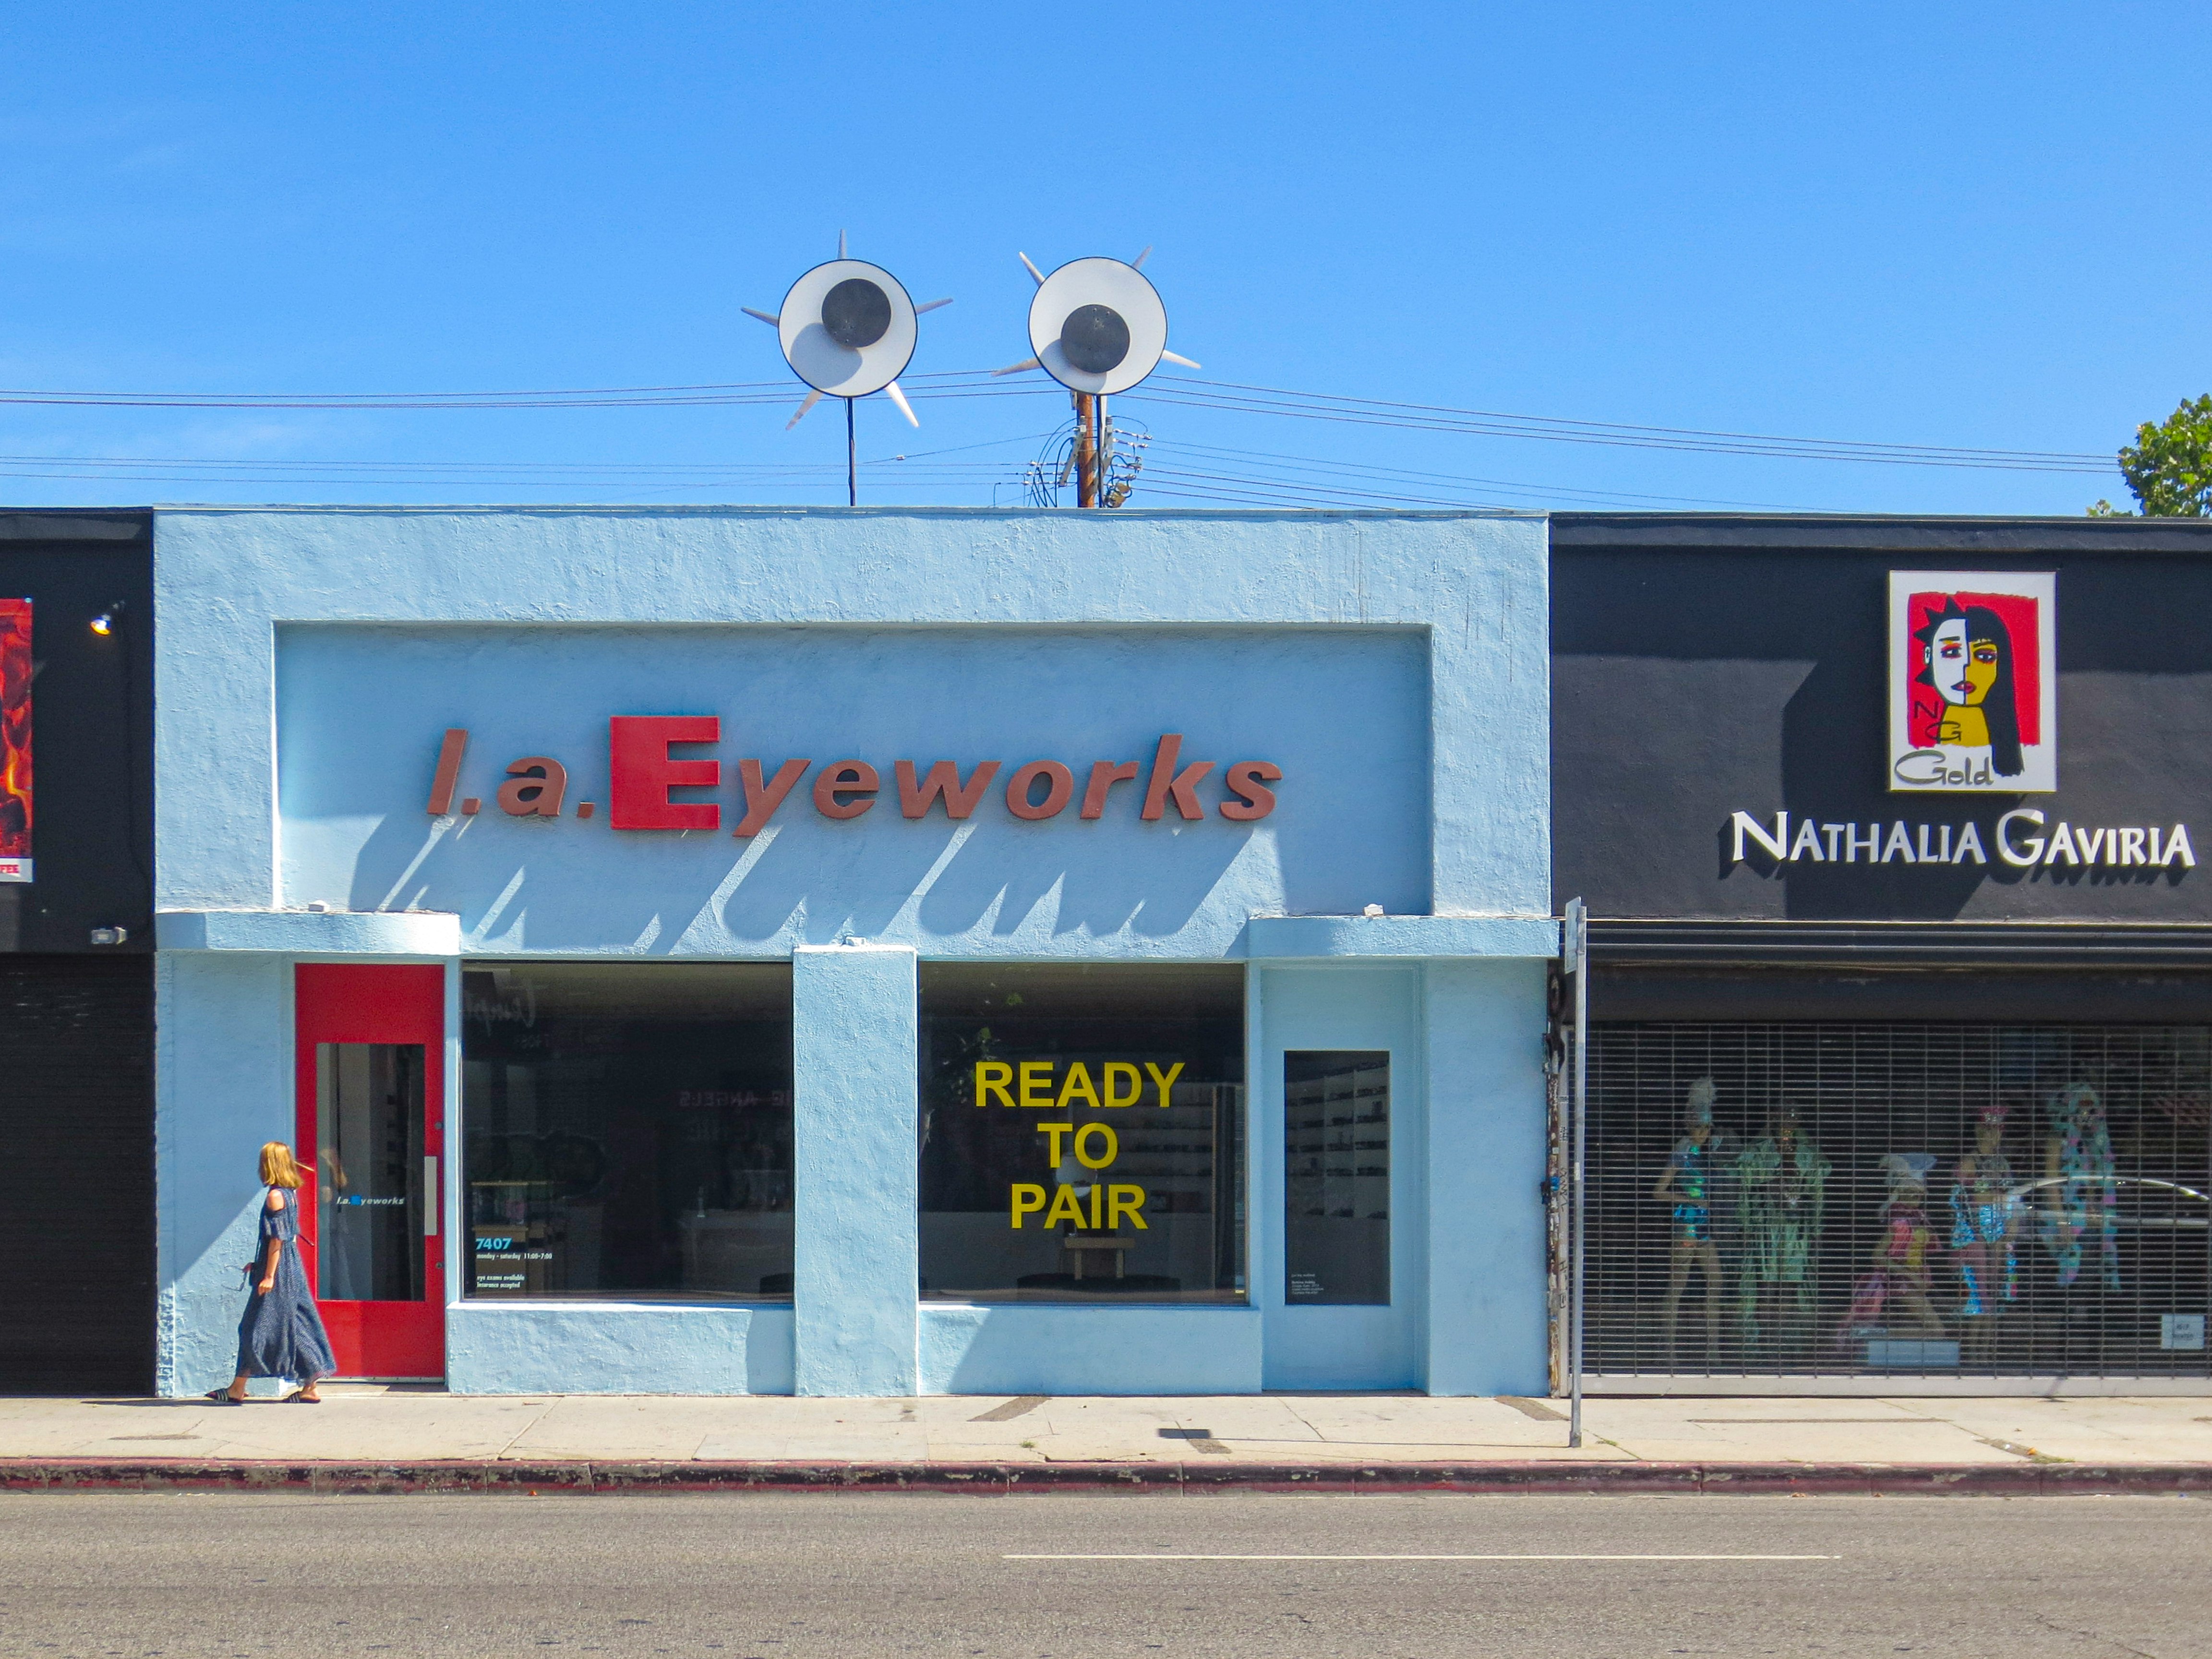 L.A. Eyeworks building near Nathalia Gaviria boutique